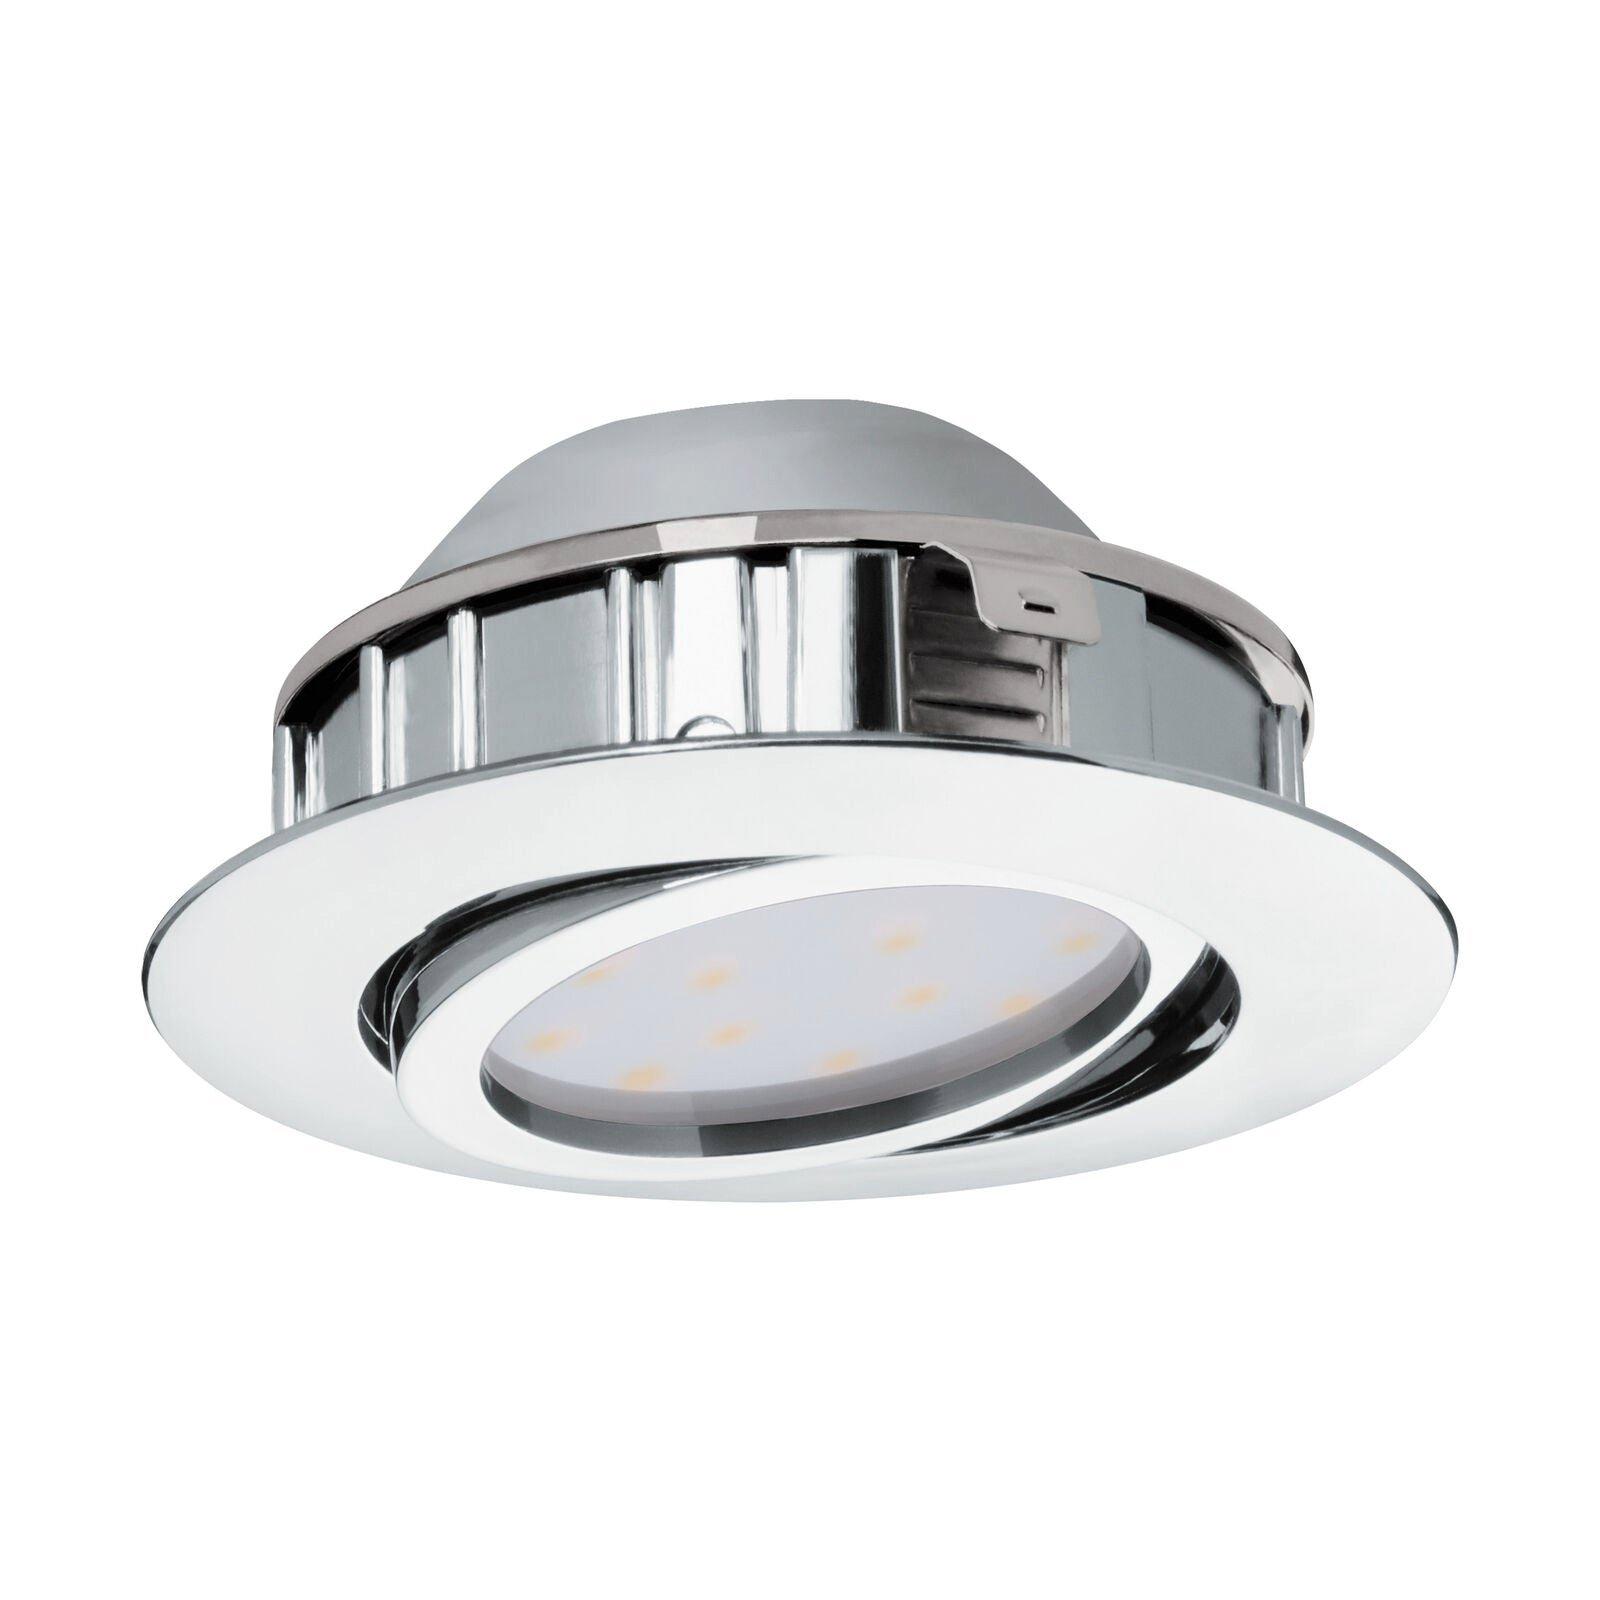 Wall / Ceiling Flush Downlight Chrome Round Recess Spotlight 6W Built in LED